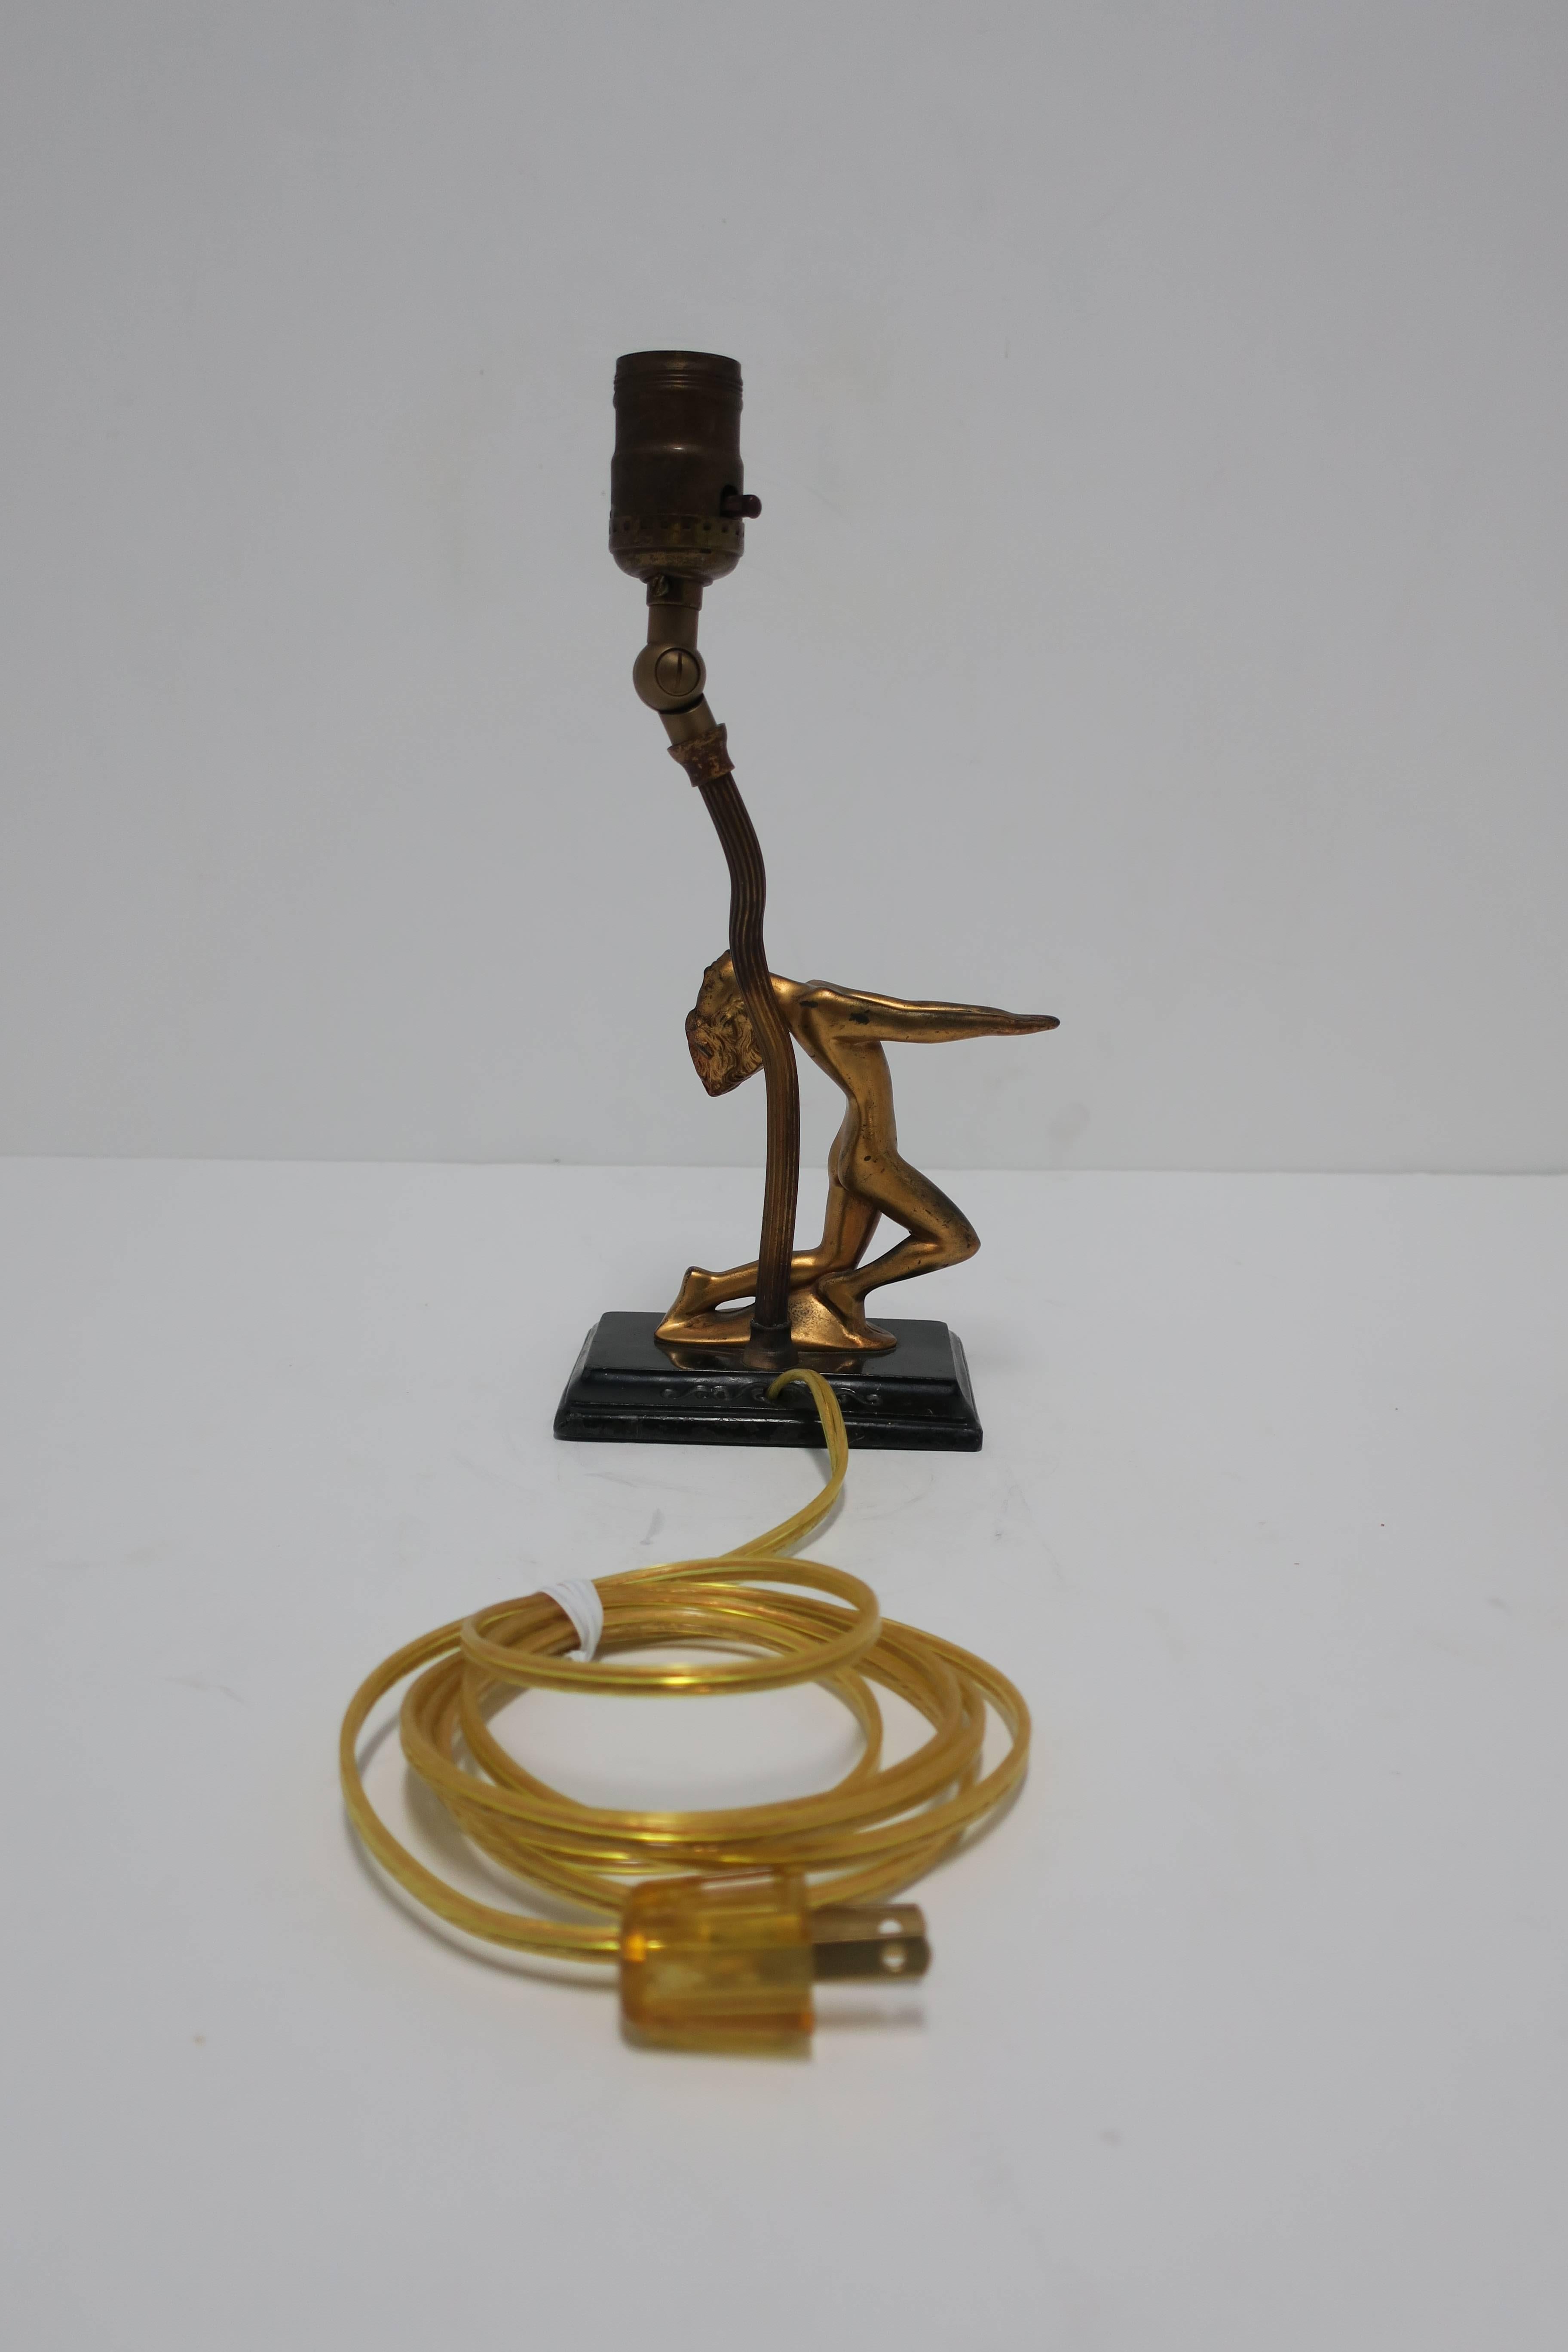 Metal Art Deco Black and Gold Female Sculpture Desk or Table Lamp After Frankart